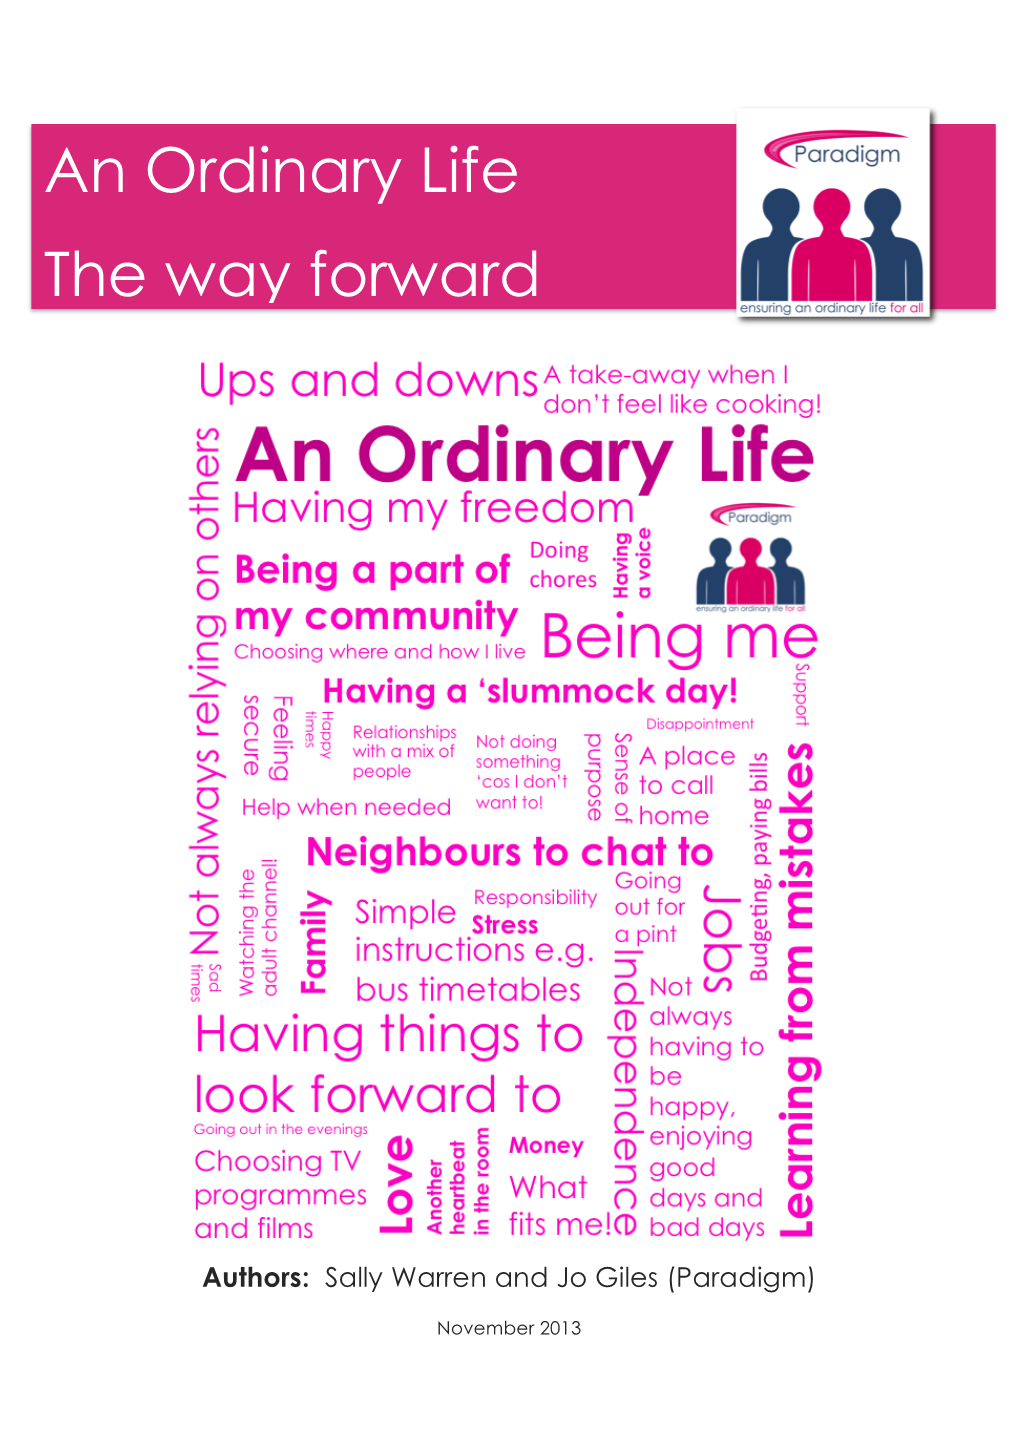 An Ordinary Life the Way Forward